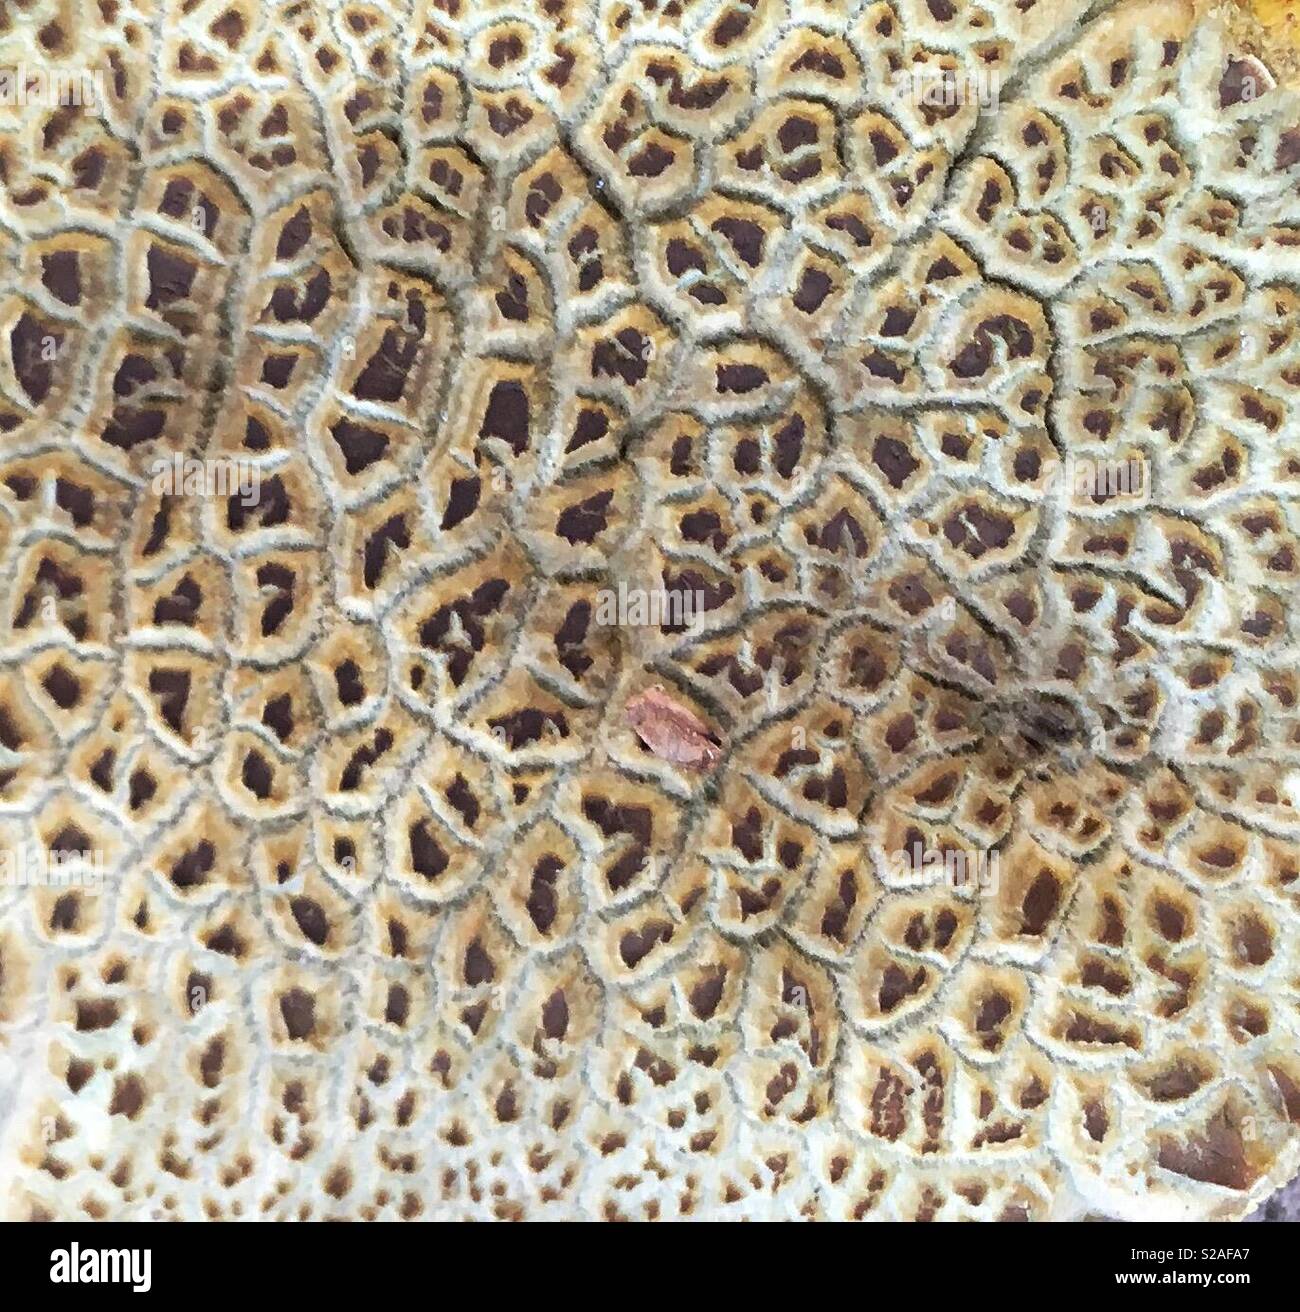 Fungus,close up. Stock Photo